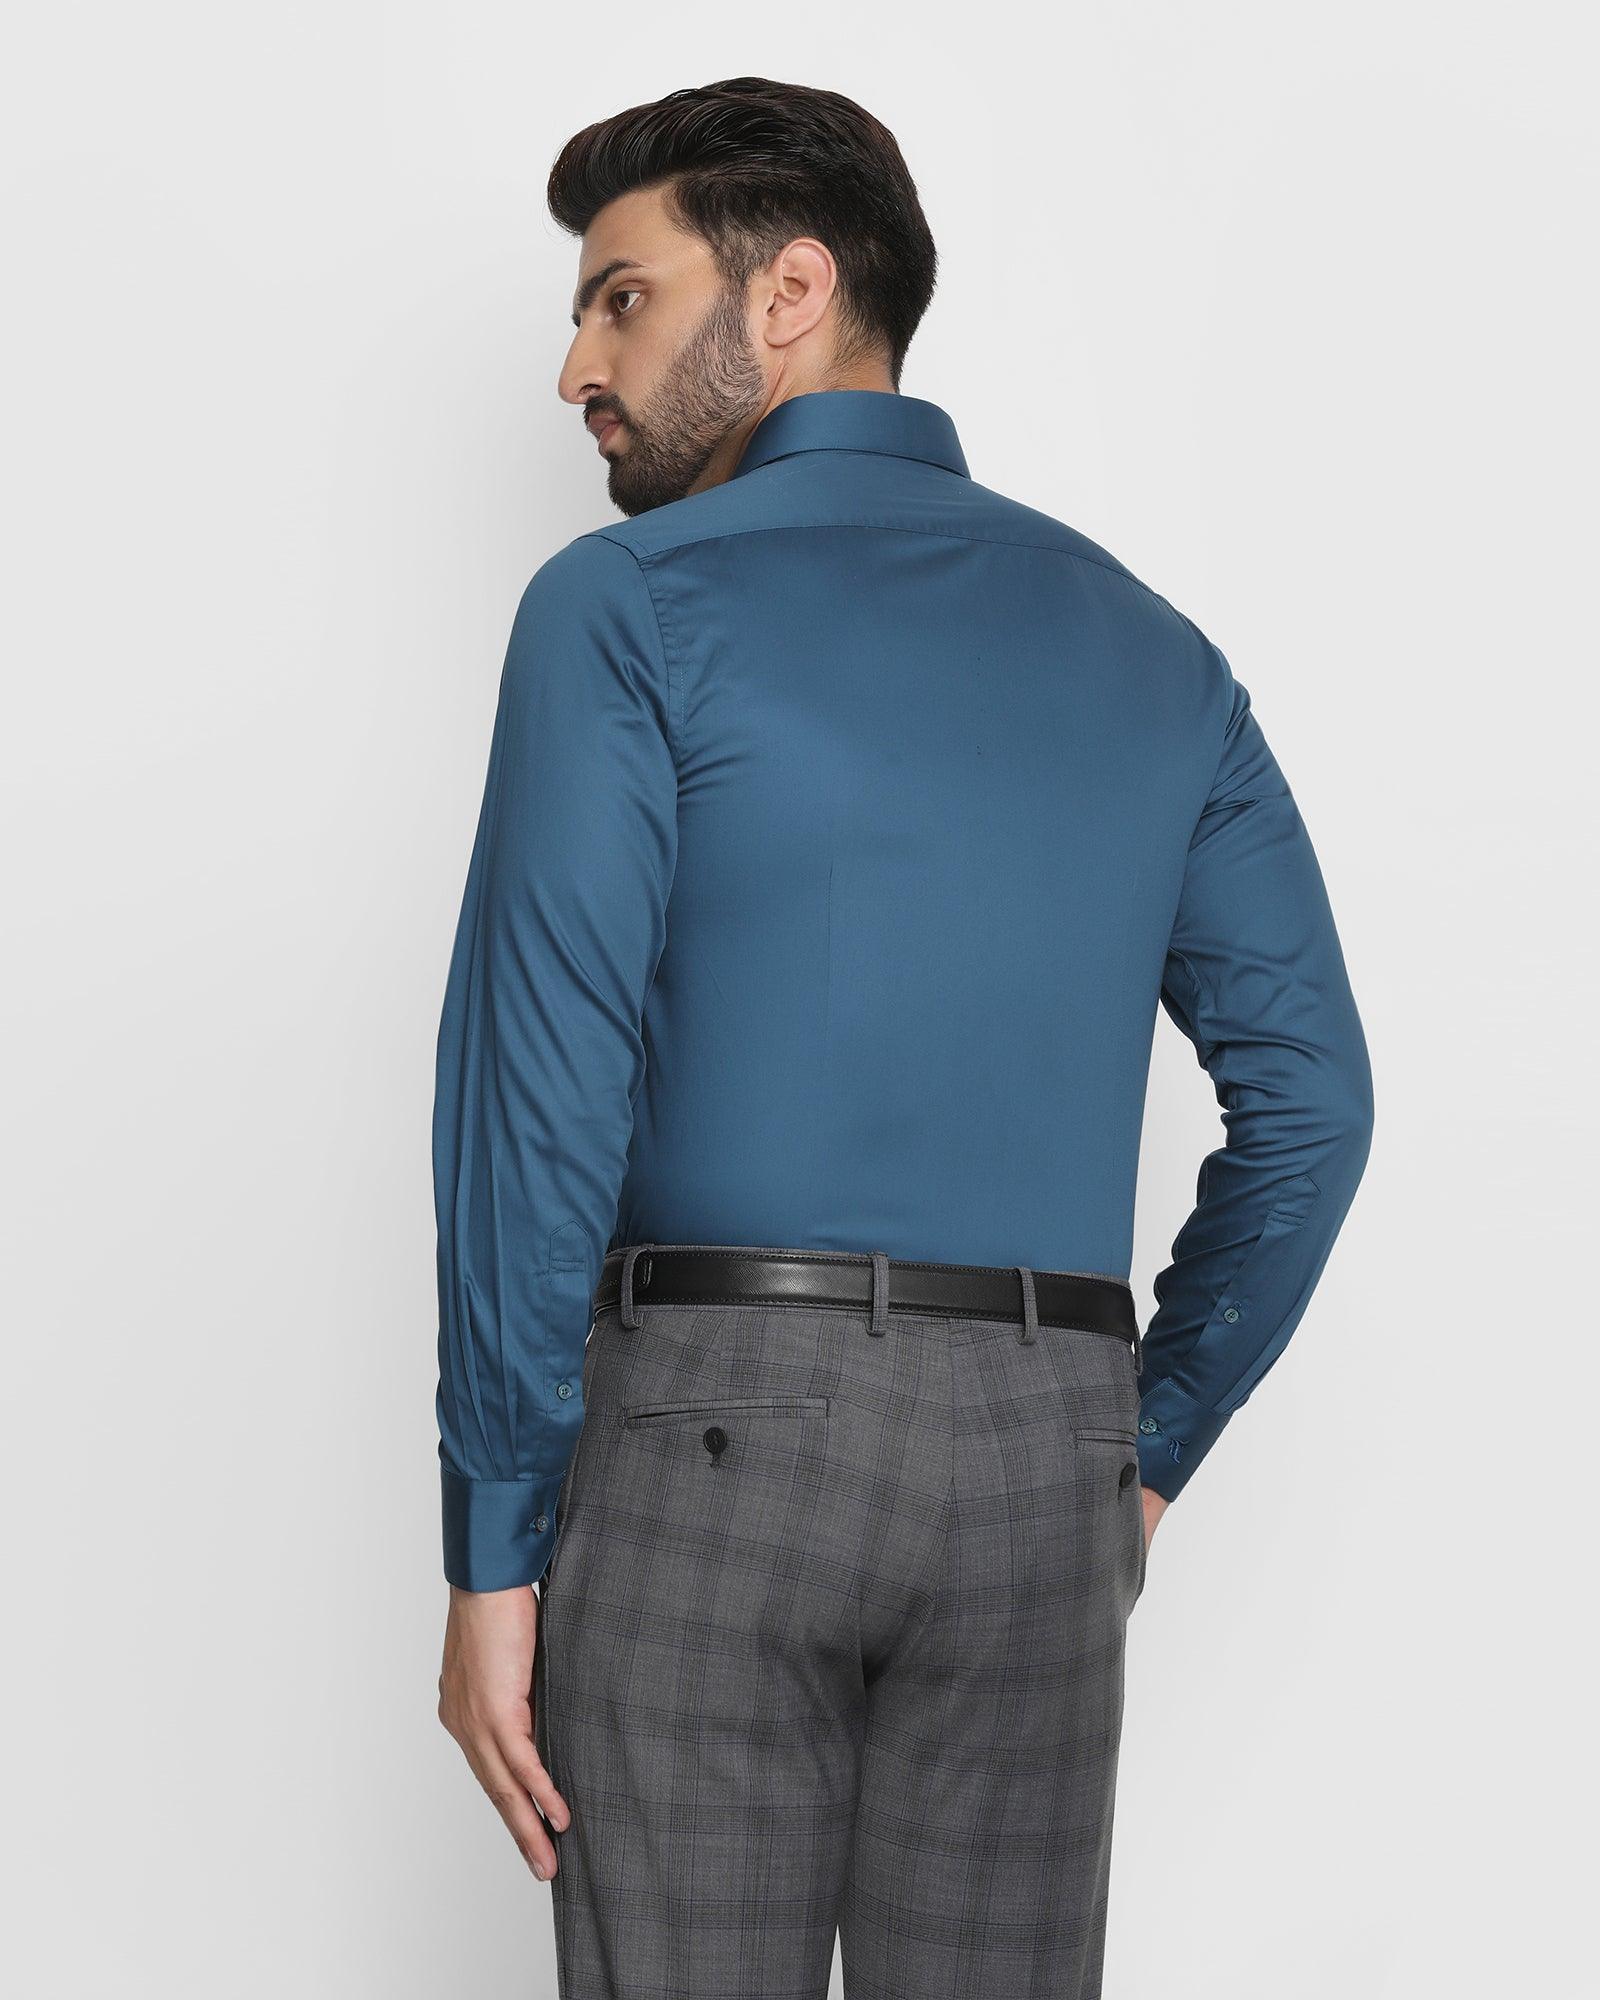 Formal Teal Solid Shirt - Tuscan